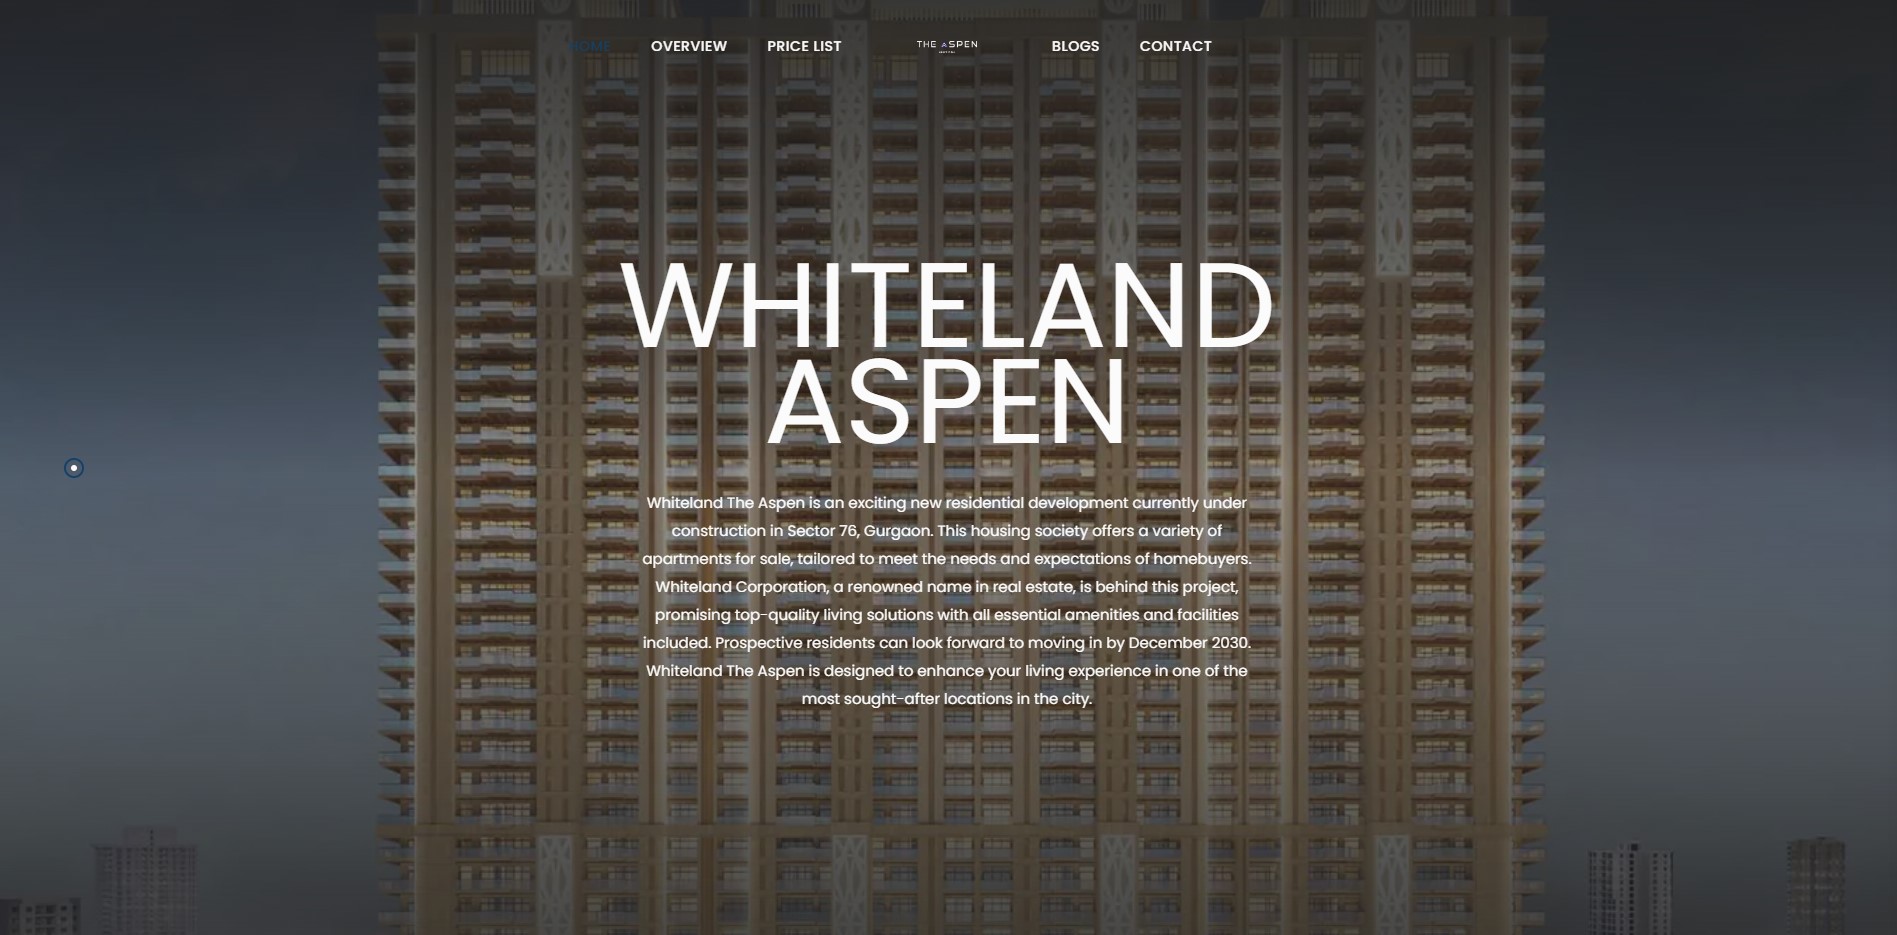 Whiteland Aspen